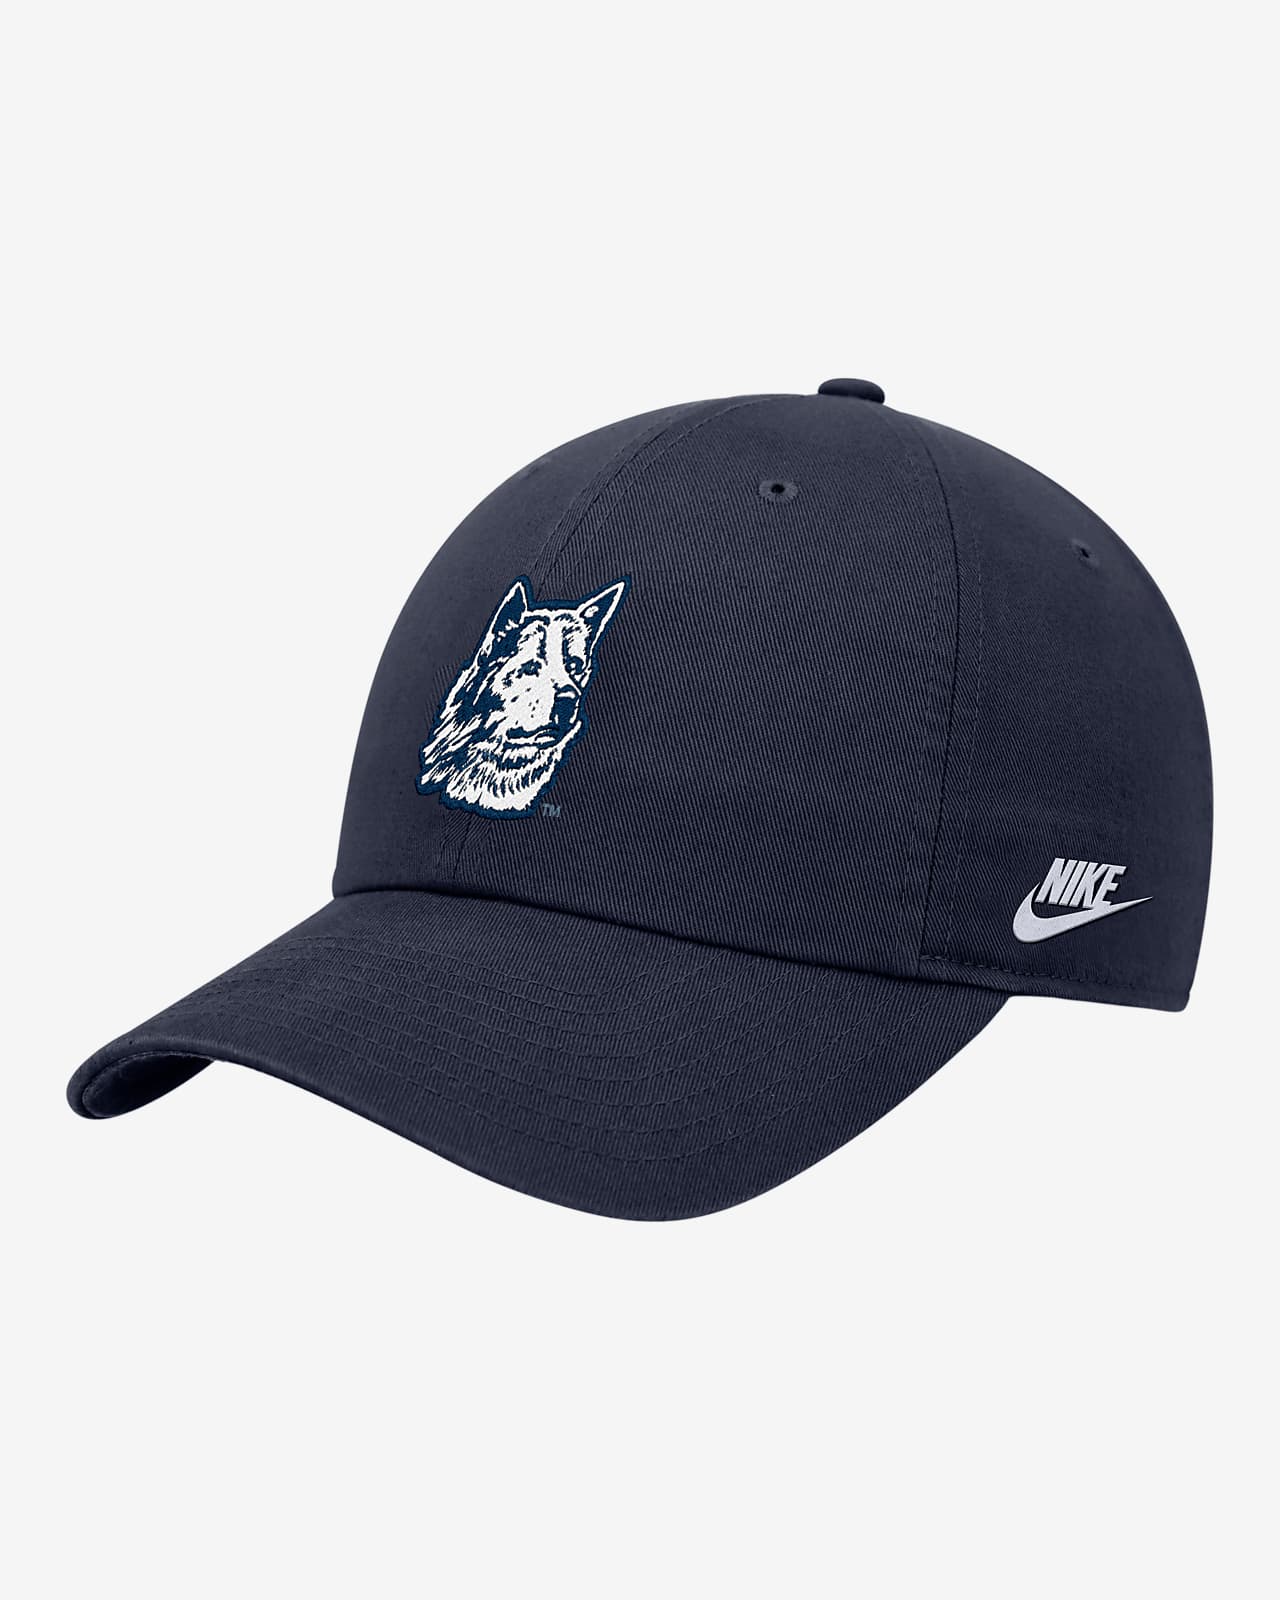 UConn Nike College Cap